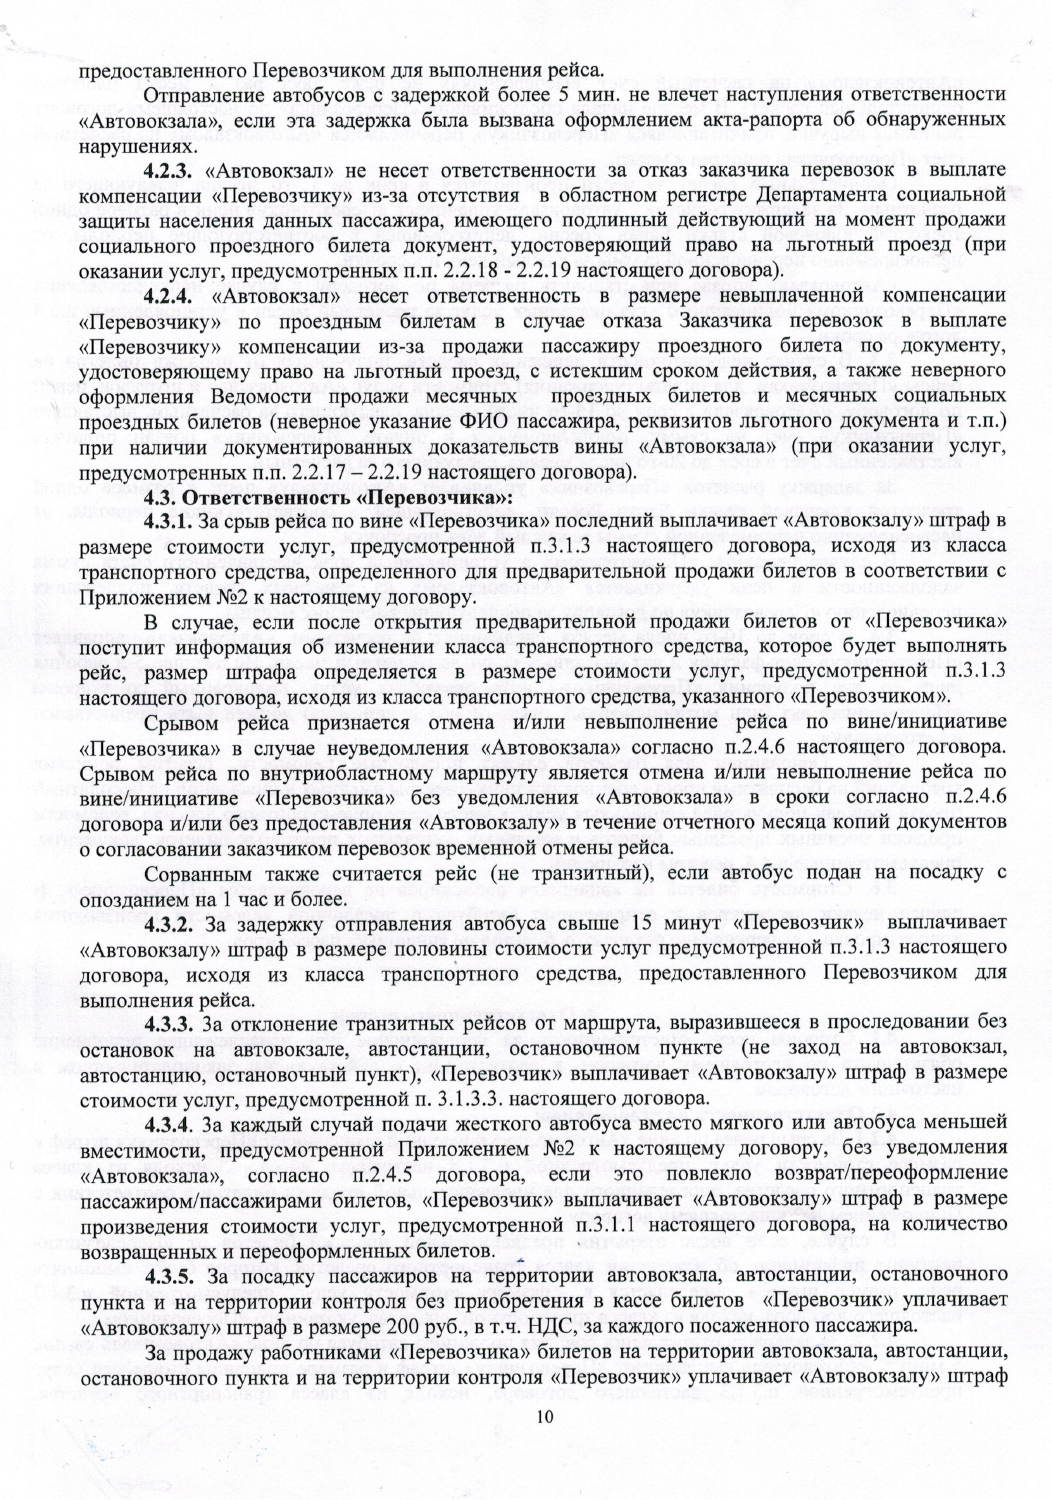 Договор ГУП владимиский вокзал-10.jpg